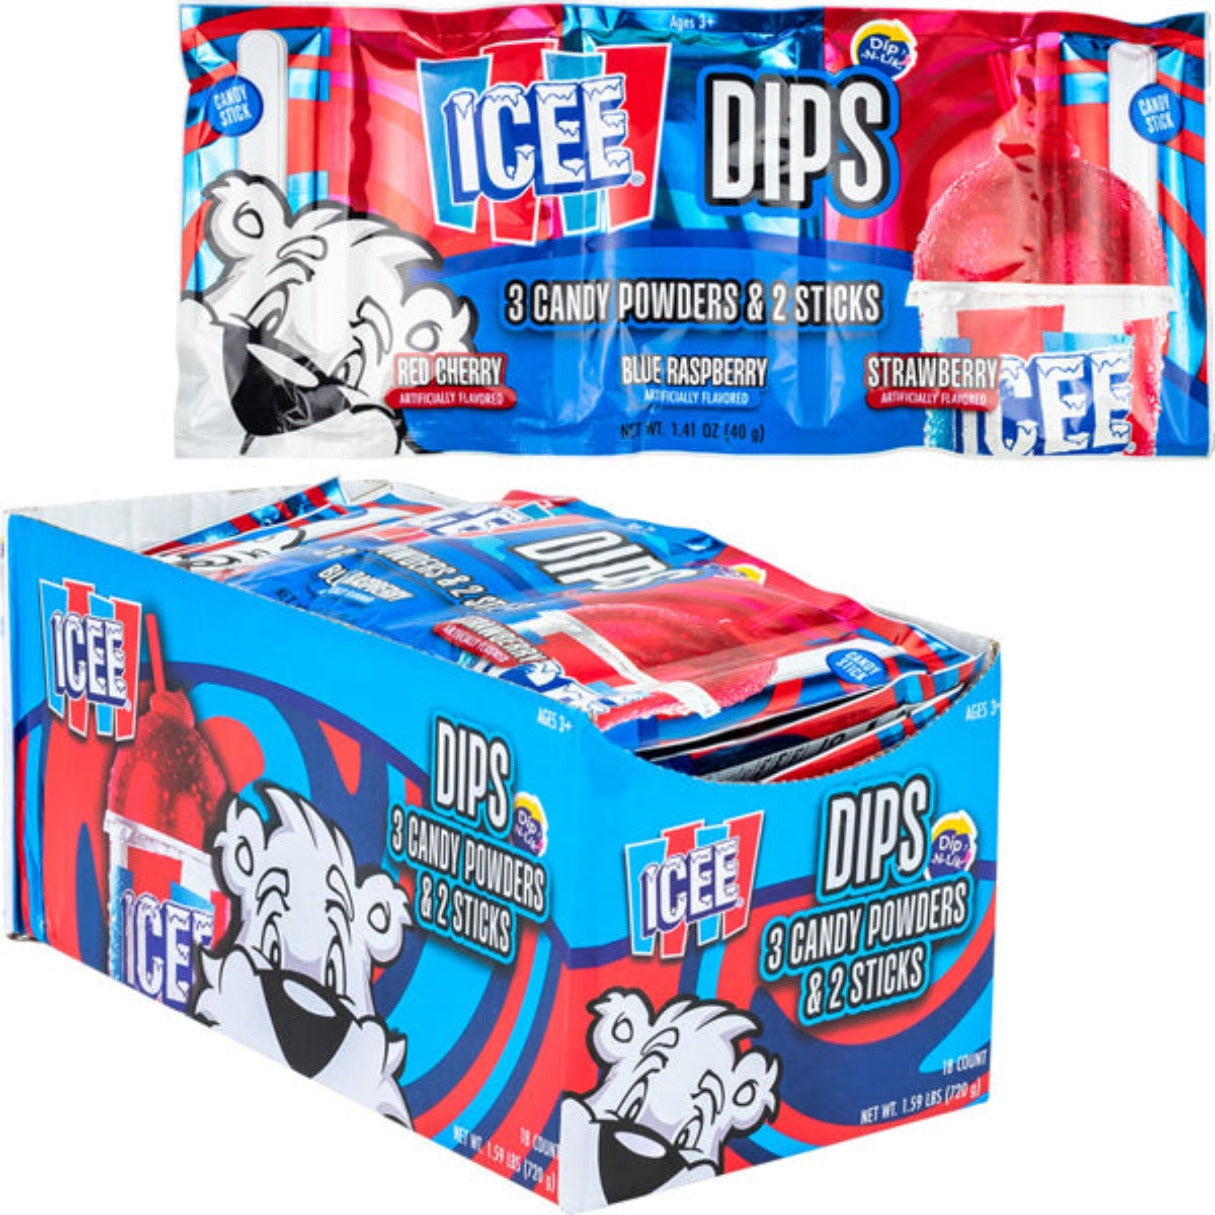 Koko's ICEE 3pk Dips Candy 1.41oz - 216ct